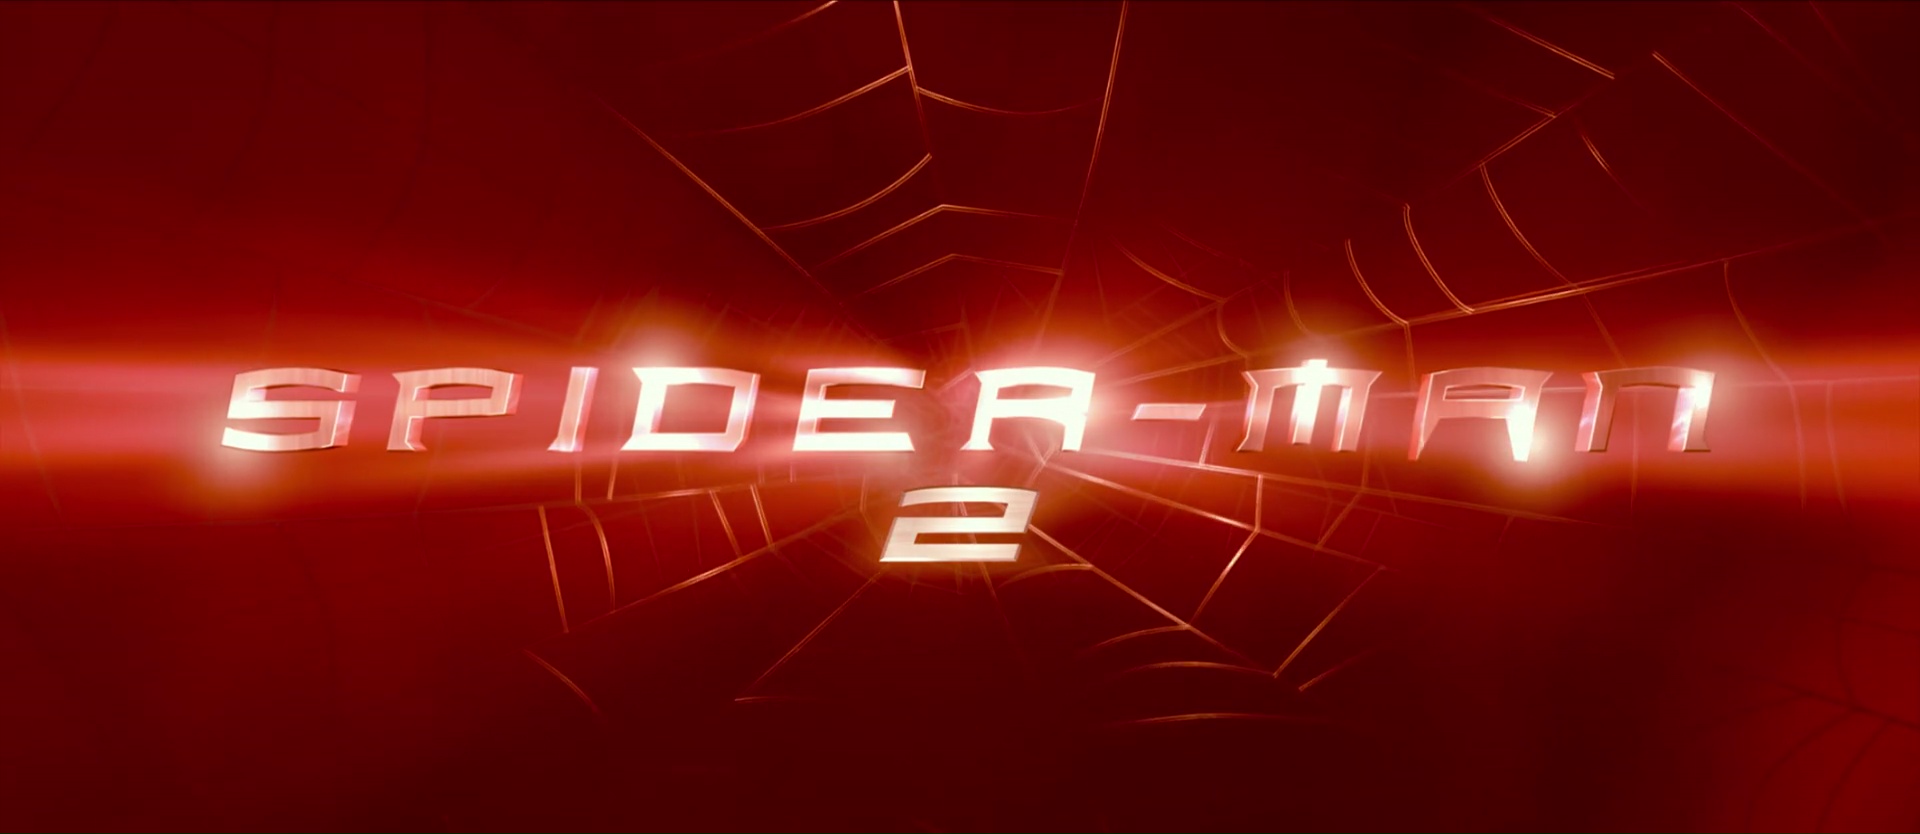 SPIDER-MAN 2 de Sam Raimi (2004)